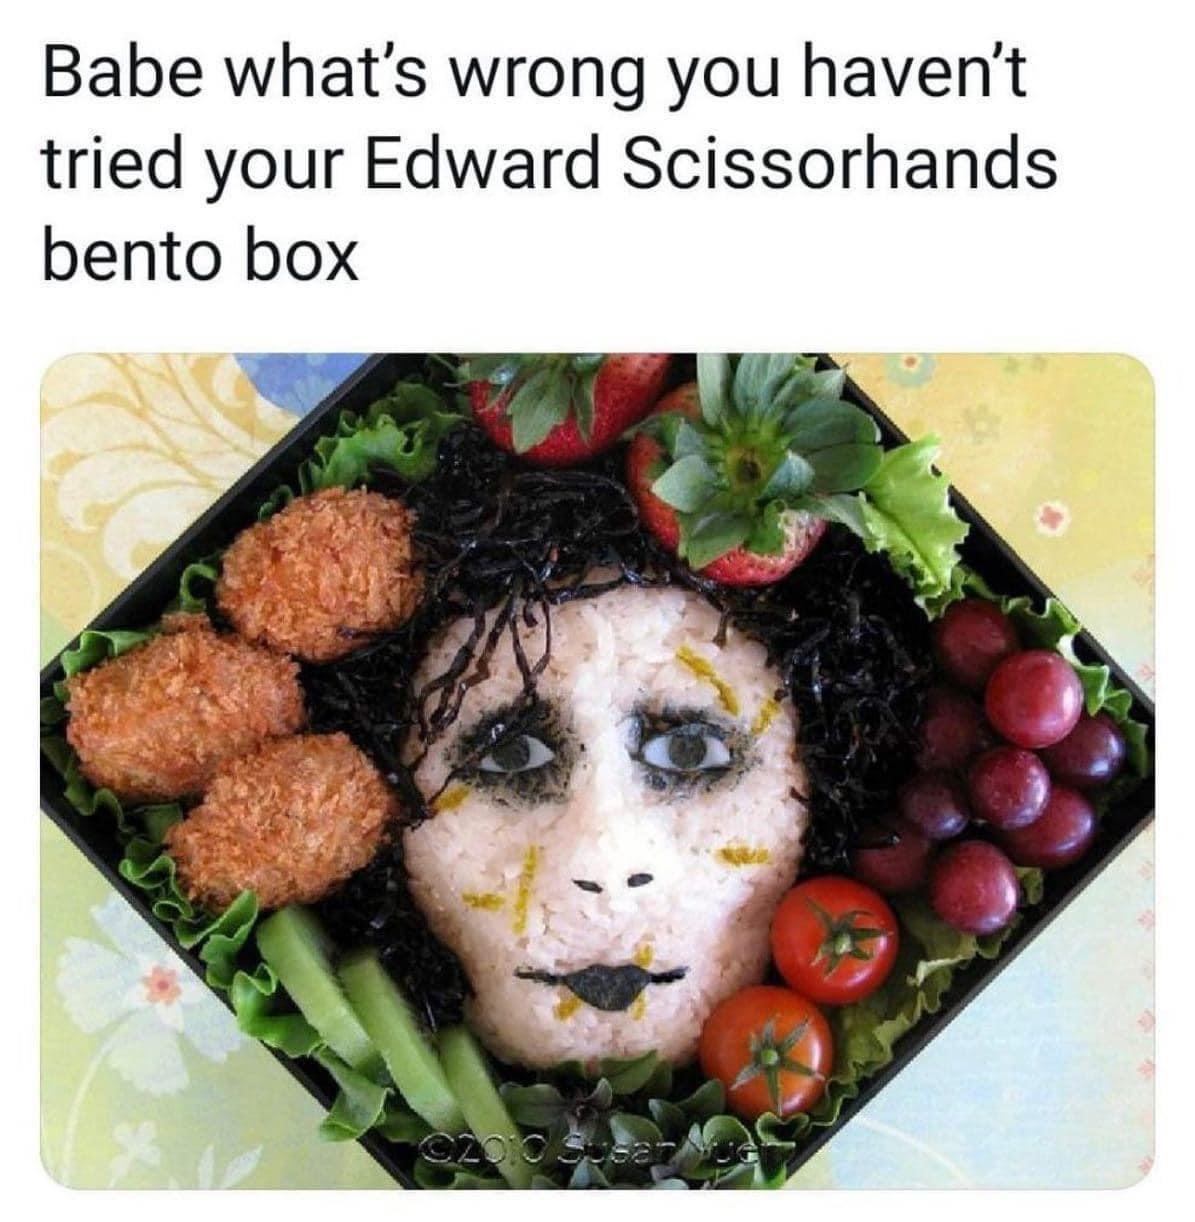 edward scissorhands bento box - Babe what's wrong you haven't tried your Edward Scissorhands bento box C2010 Susan